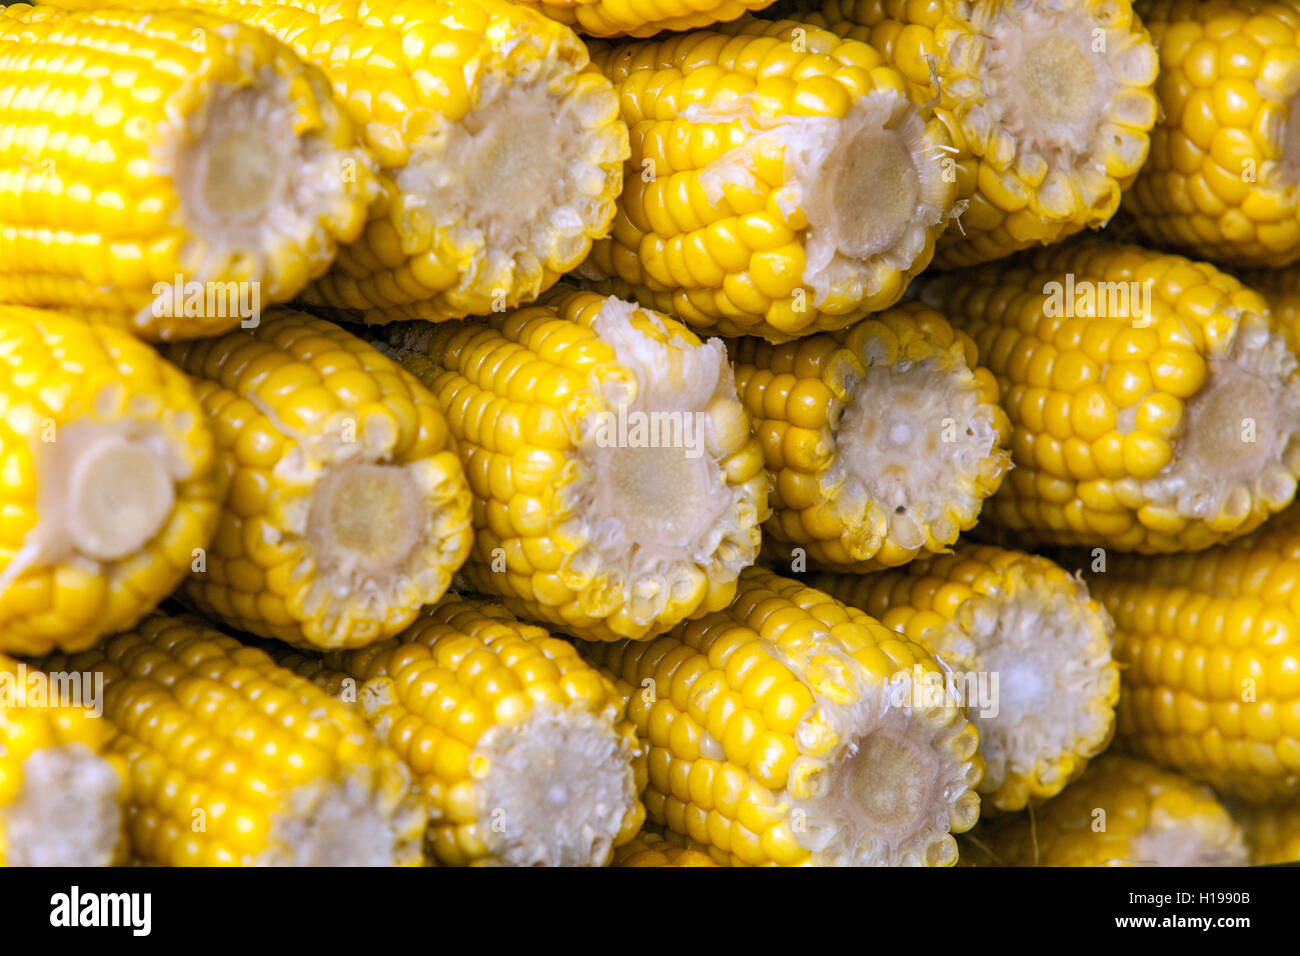 corn on the cob, corn cobs boiled Stock Photo